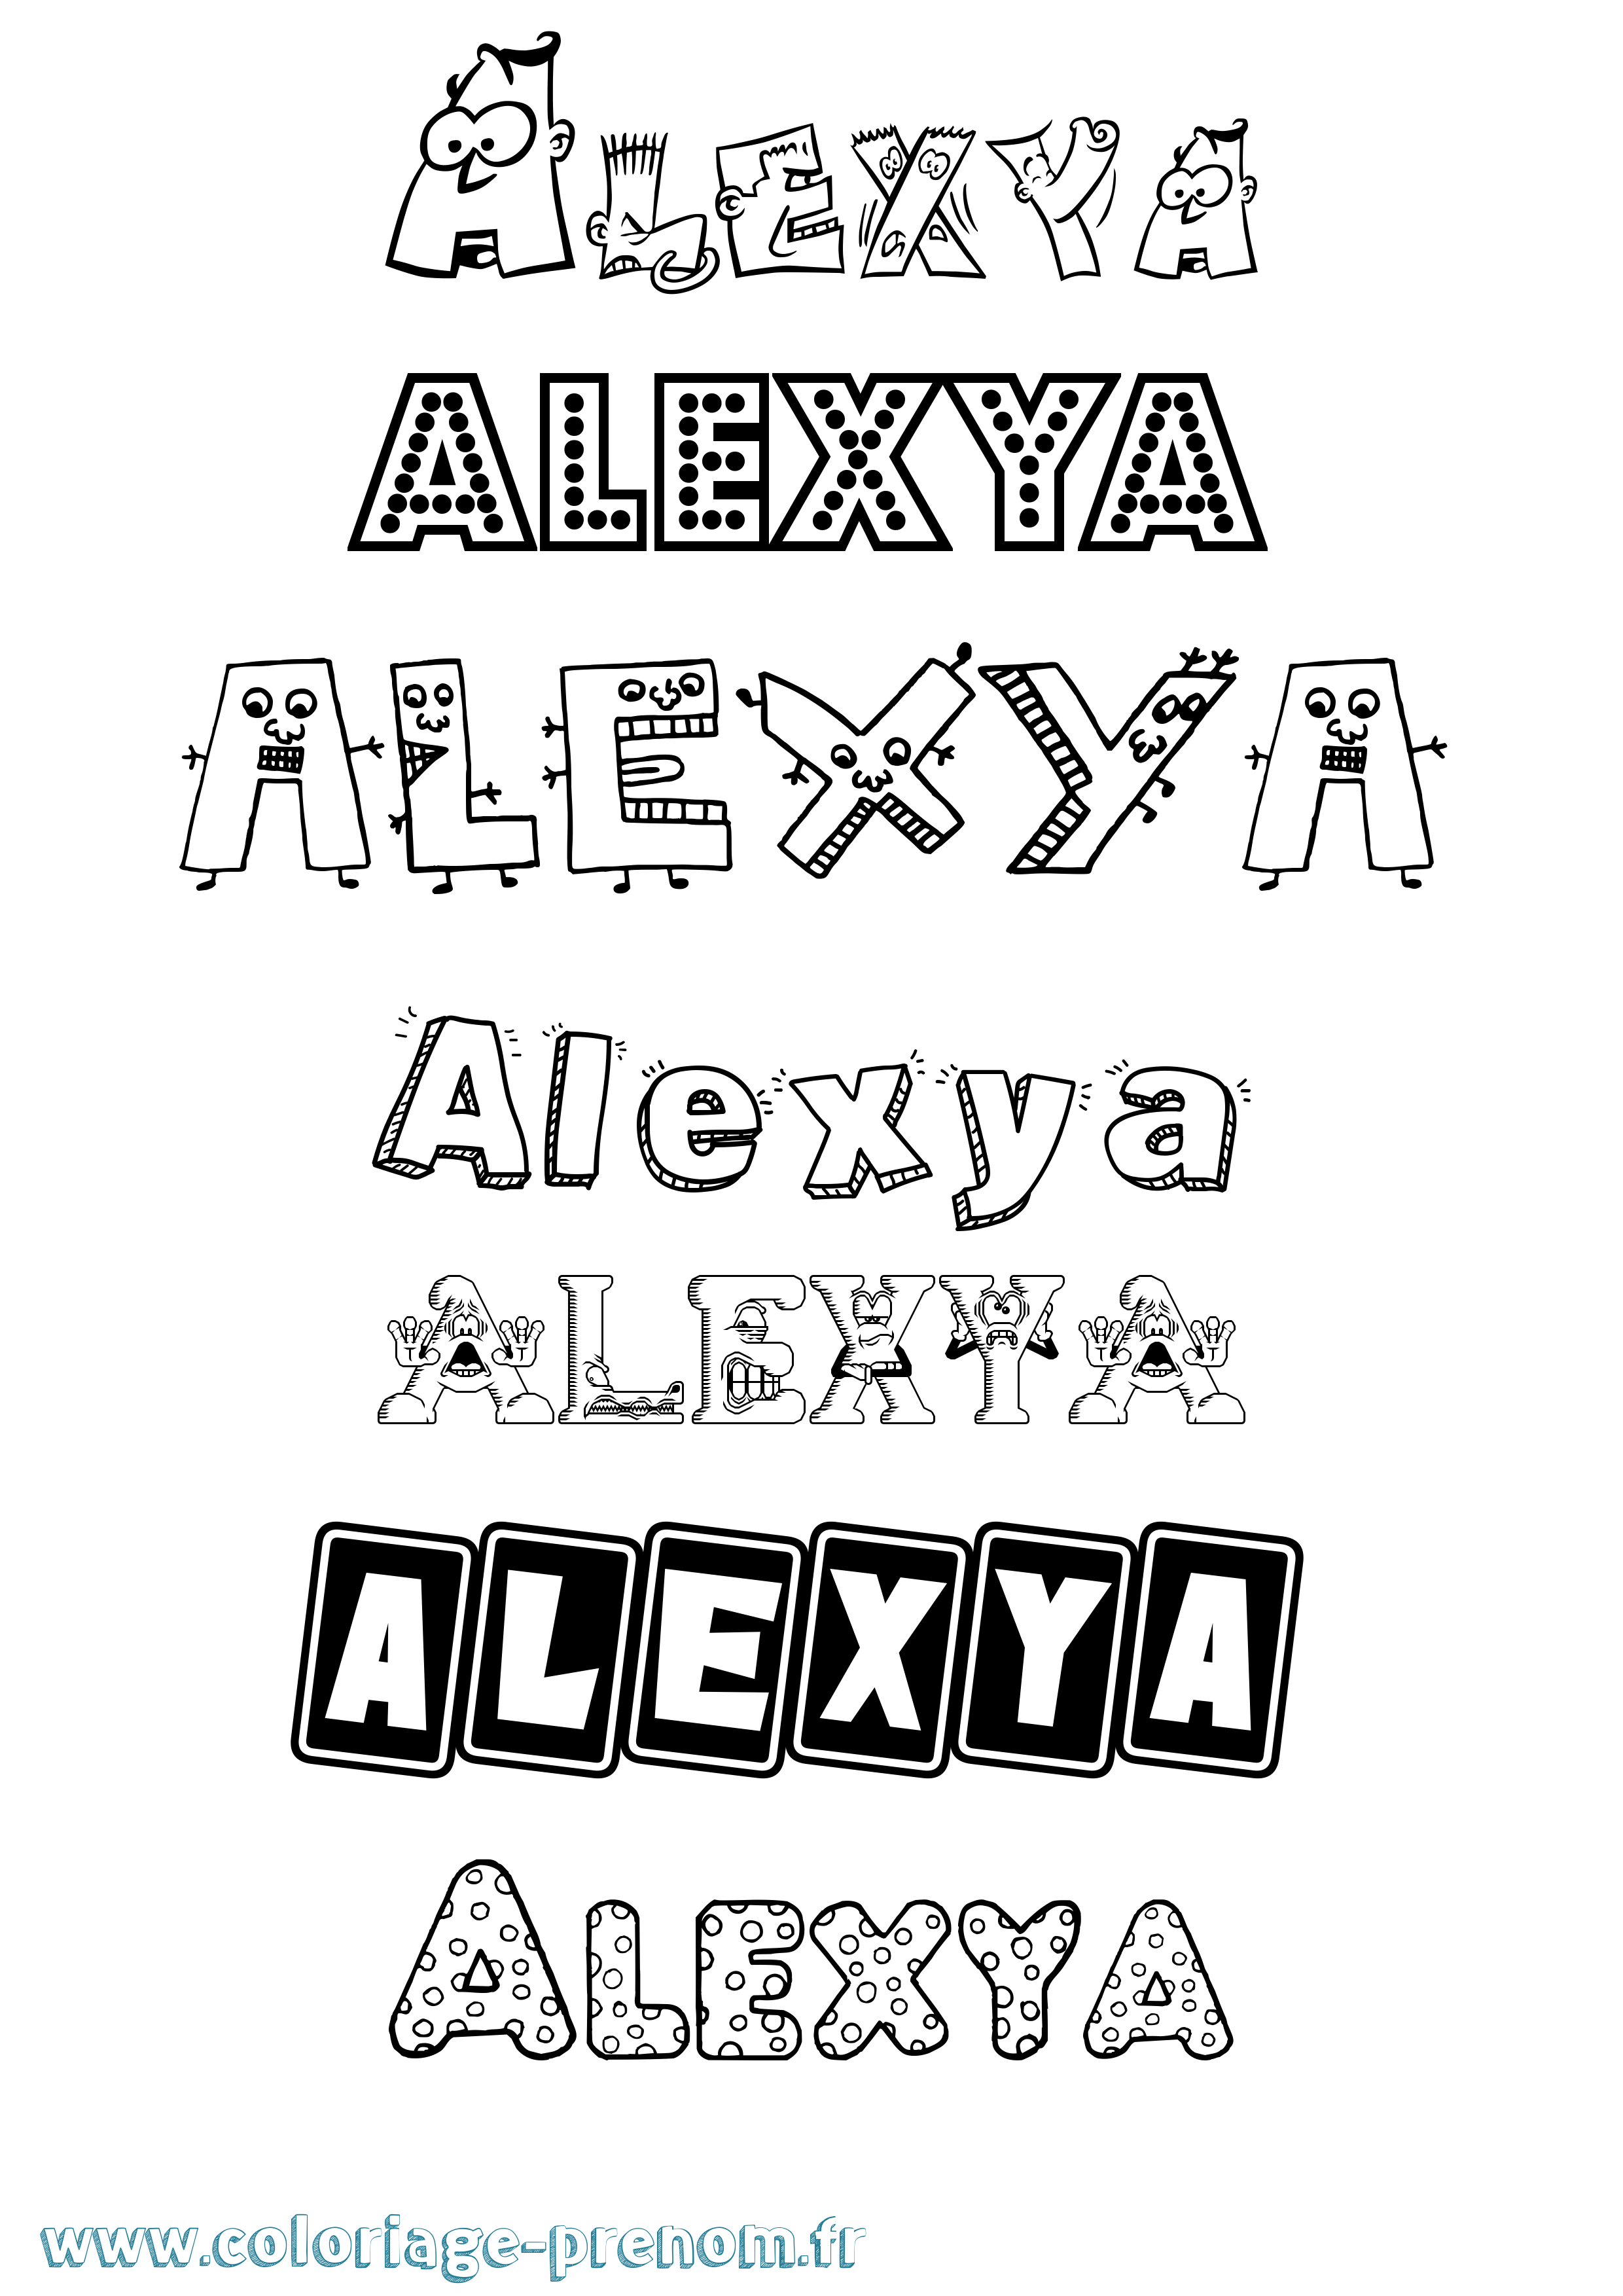 Coloriage prénom Alexya Fun